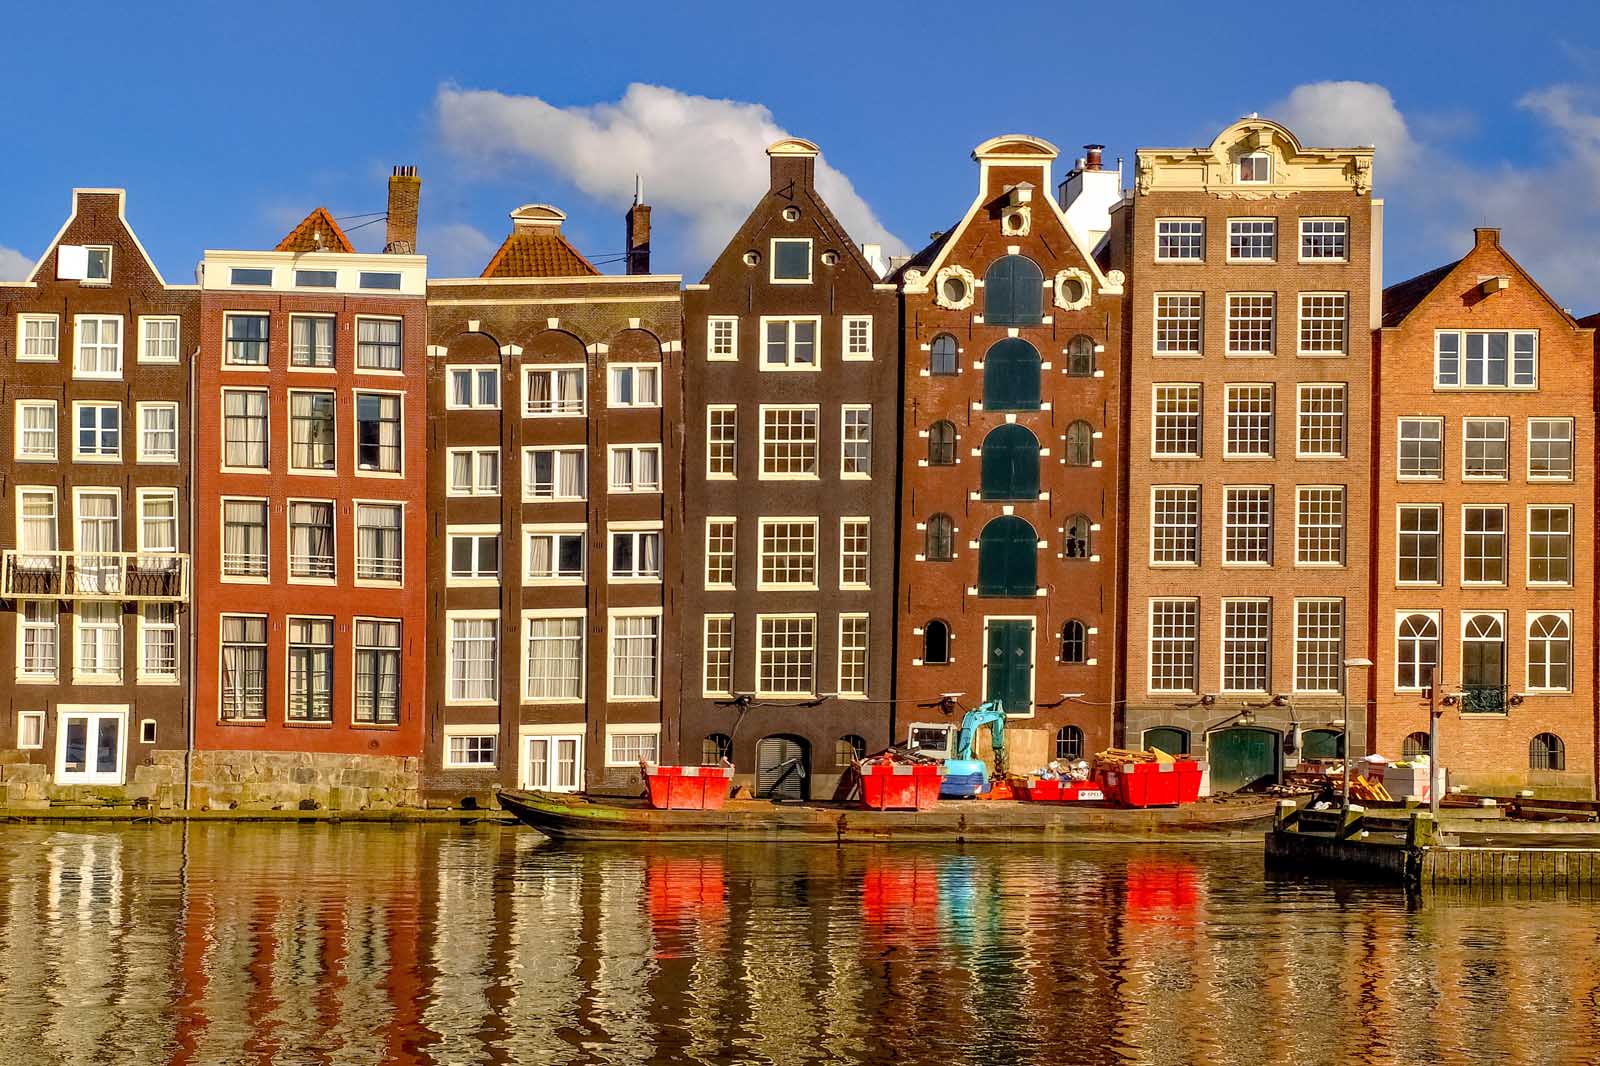 Oud West Neighbourhood in Amsterdam